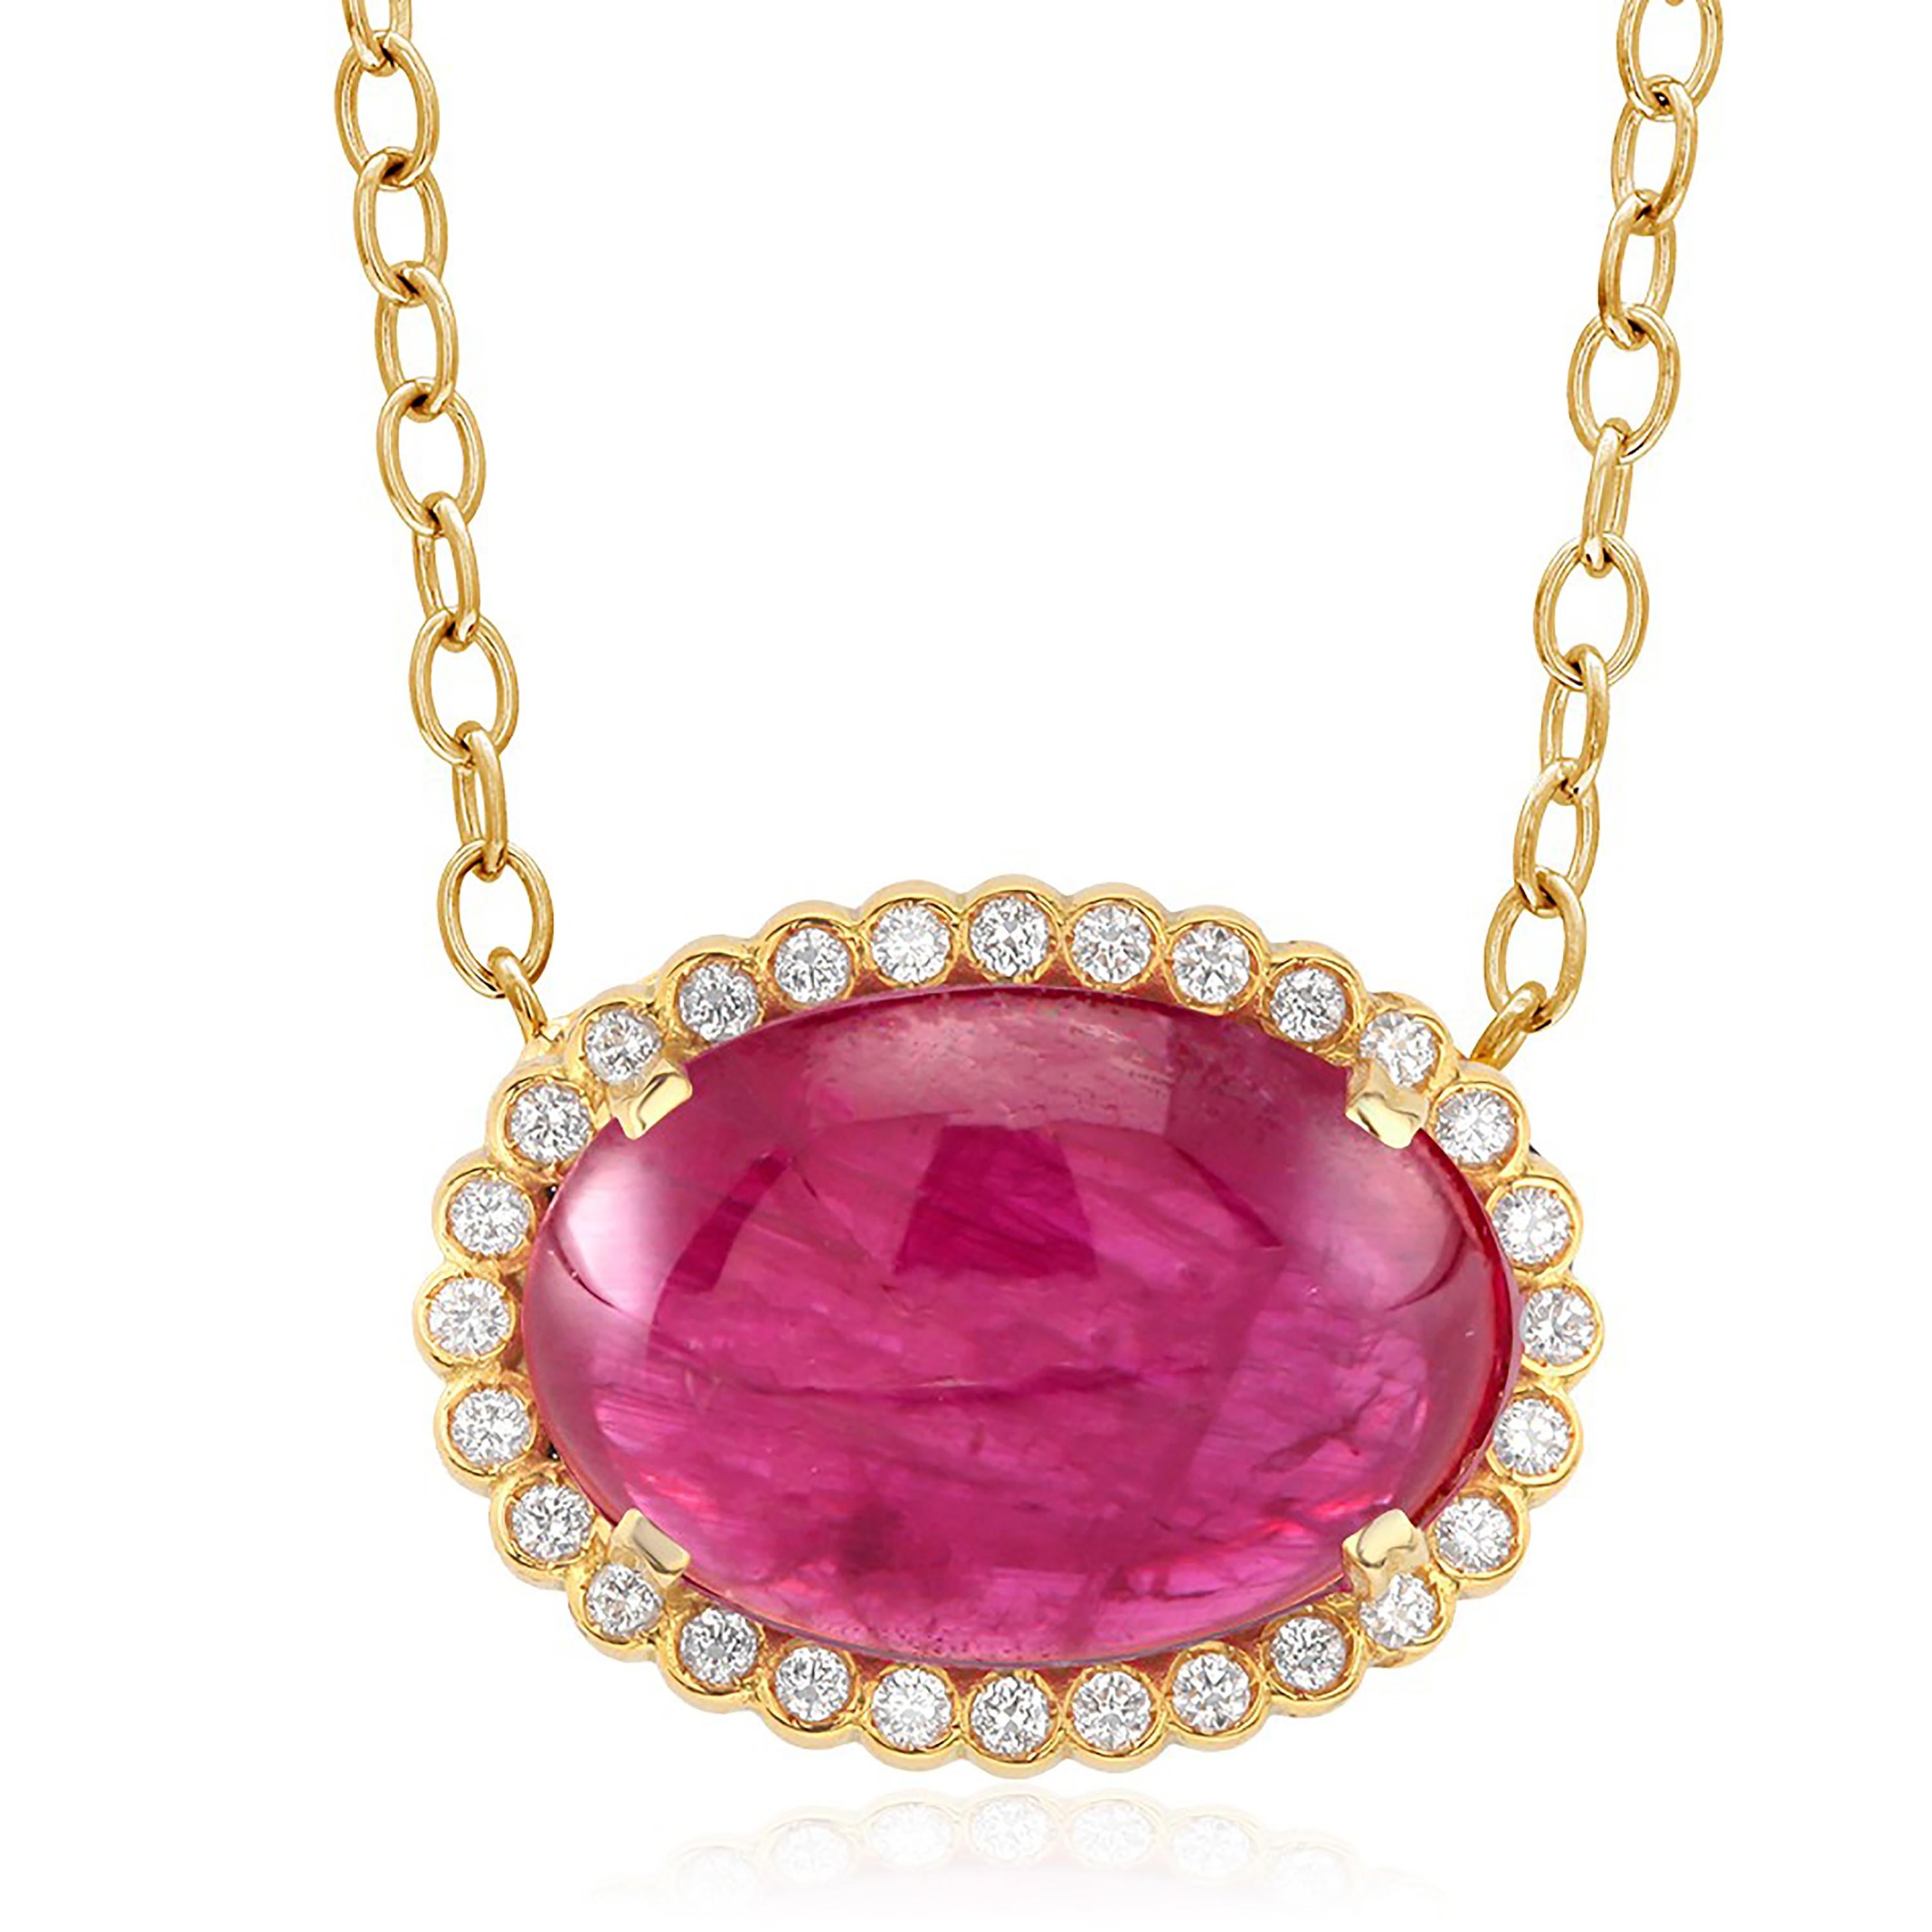 Oval Cut Cabochon Burma Ruby Diamond Gold Drop Necklace Pendant Weighing 21.86 Carat